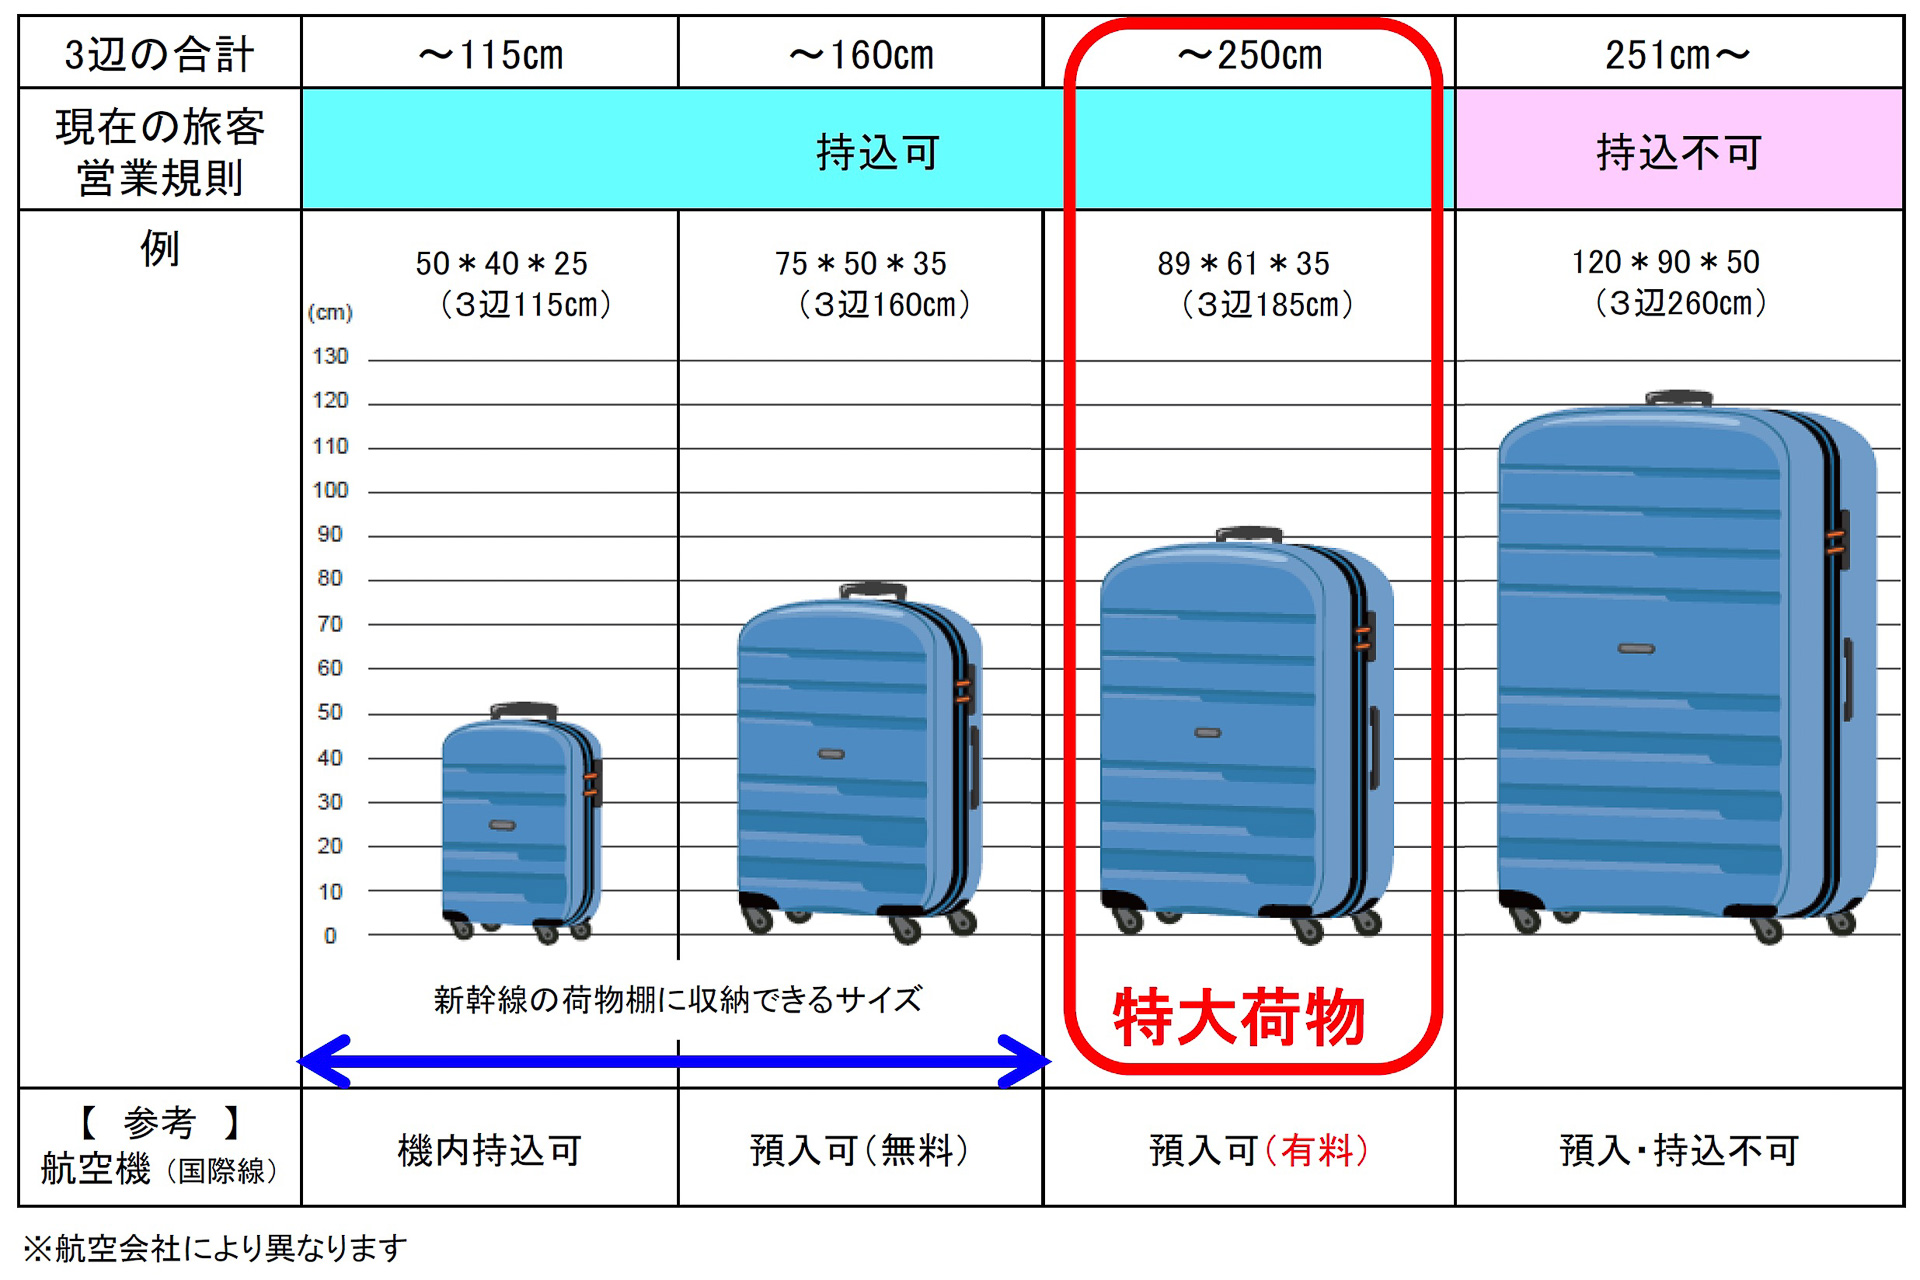 [B!] 東海道/山陽/九州新幹線、「特大荷物置場」「事前予約制」を2020年5月導入。利用無料。「特大荷物」は「国際線航空機・有料預入荷物のサイズ」